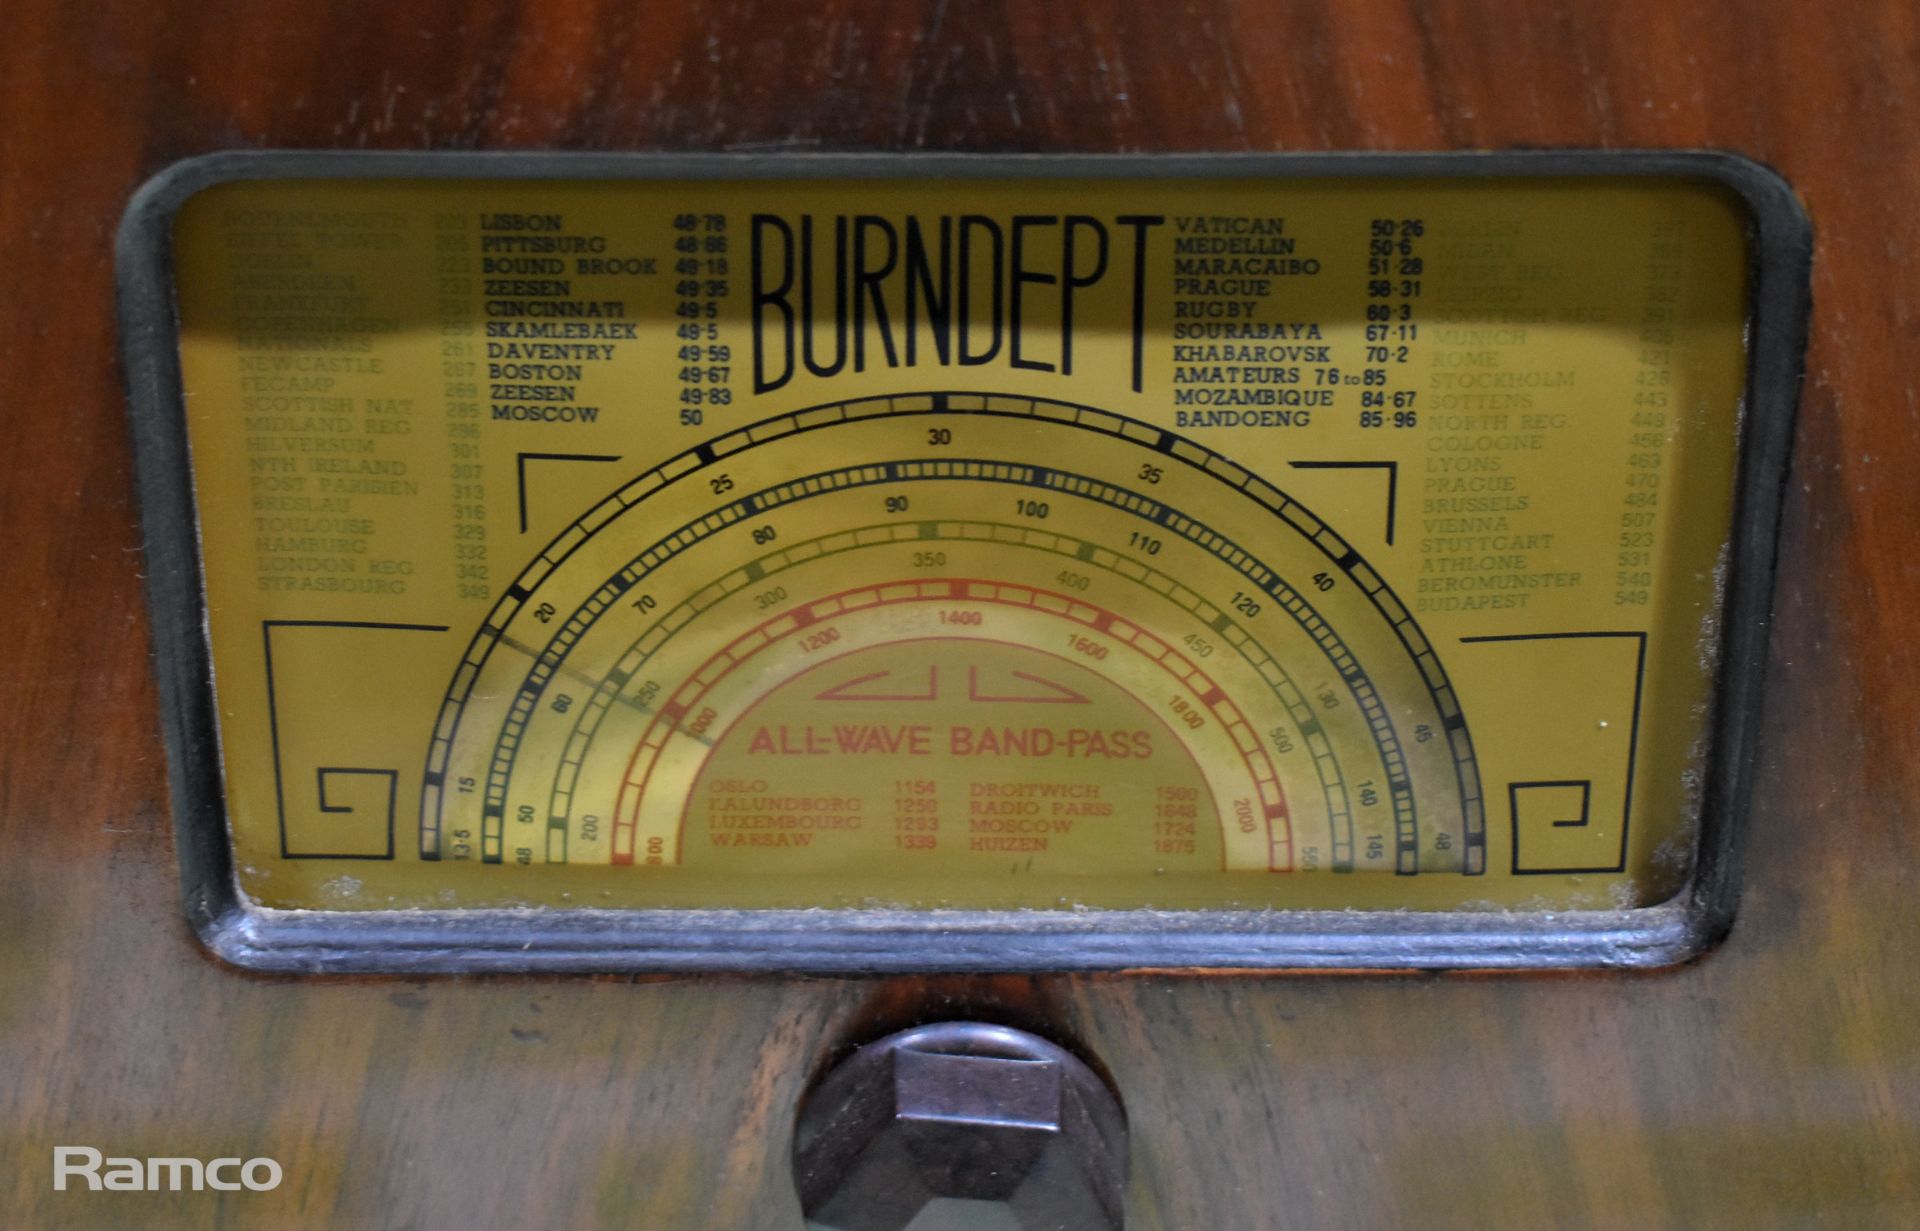 Burndept Model 252 all-wave valve radio - Image 4 of 9